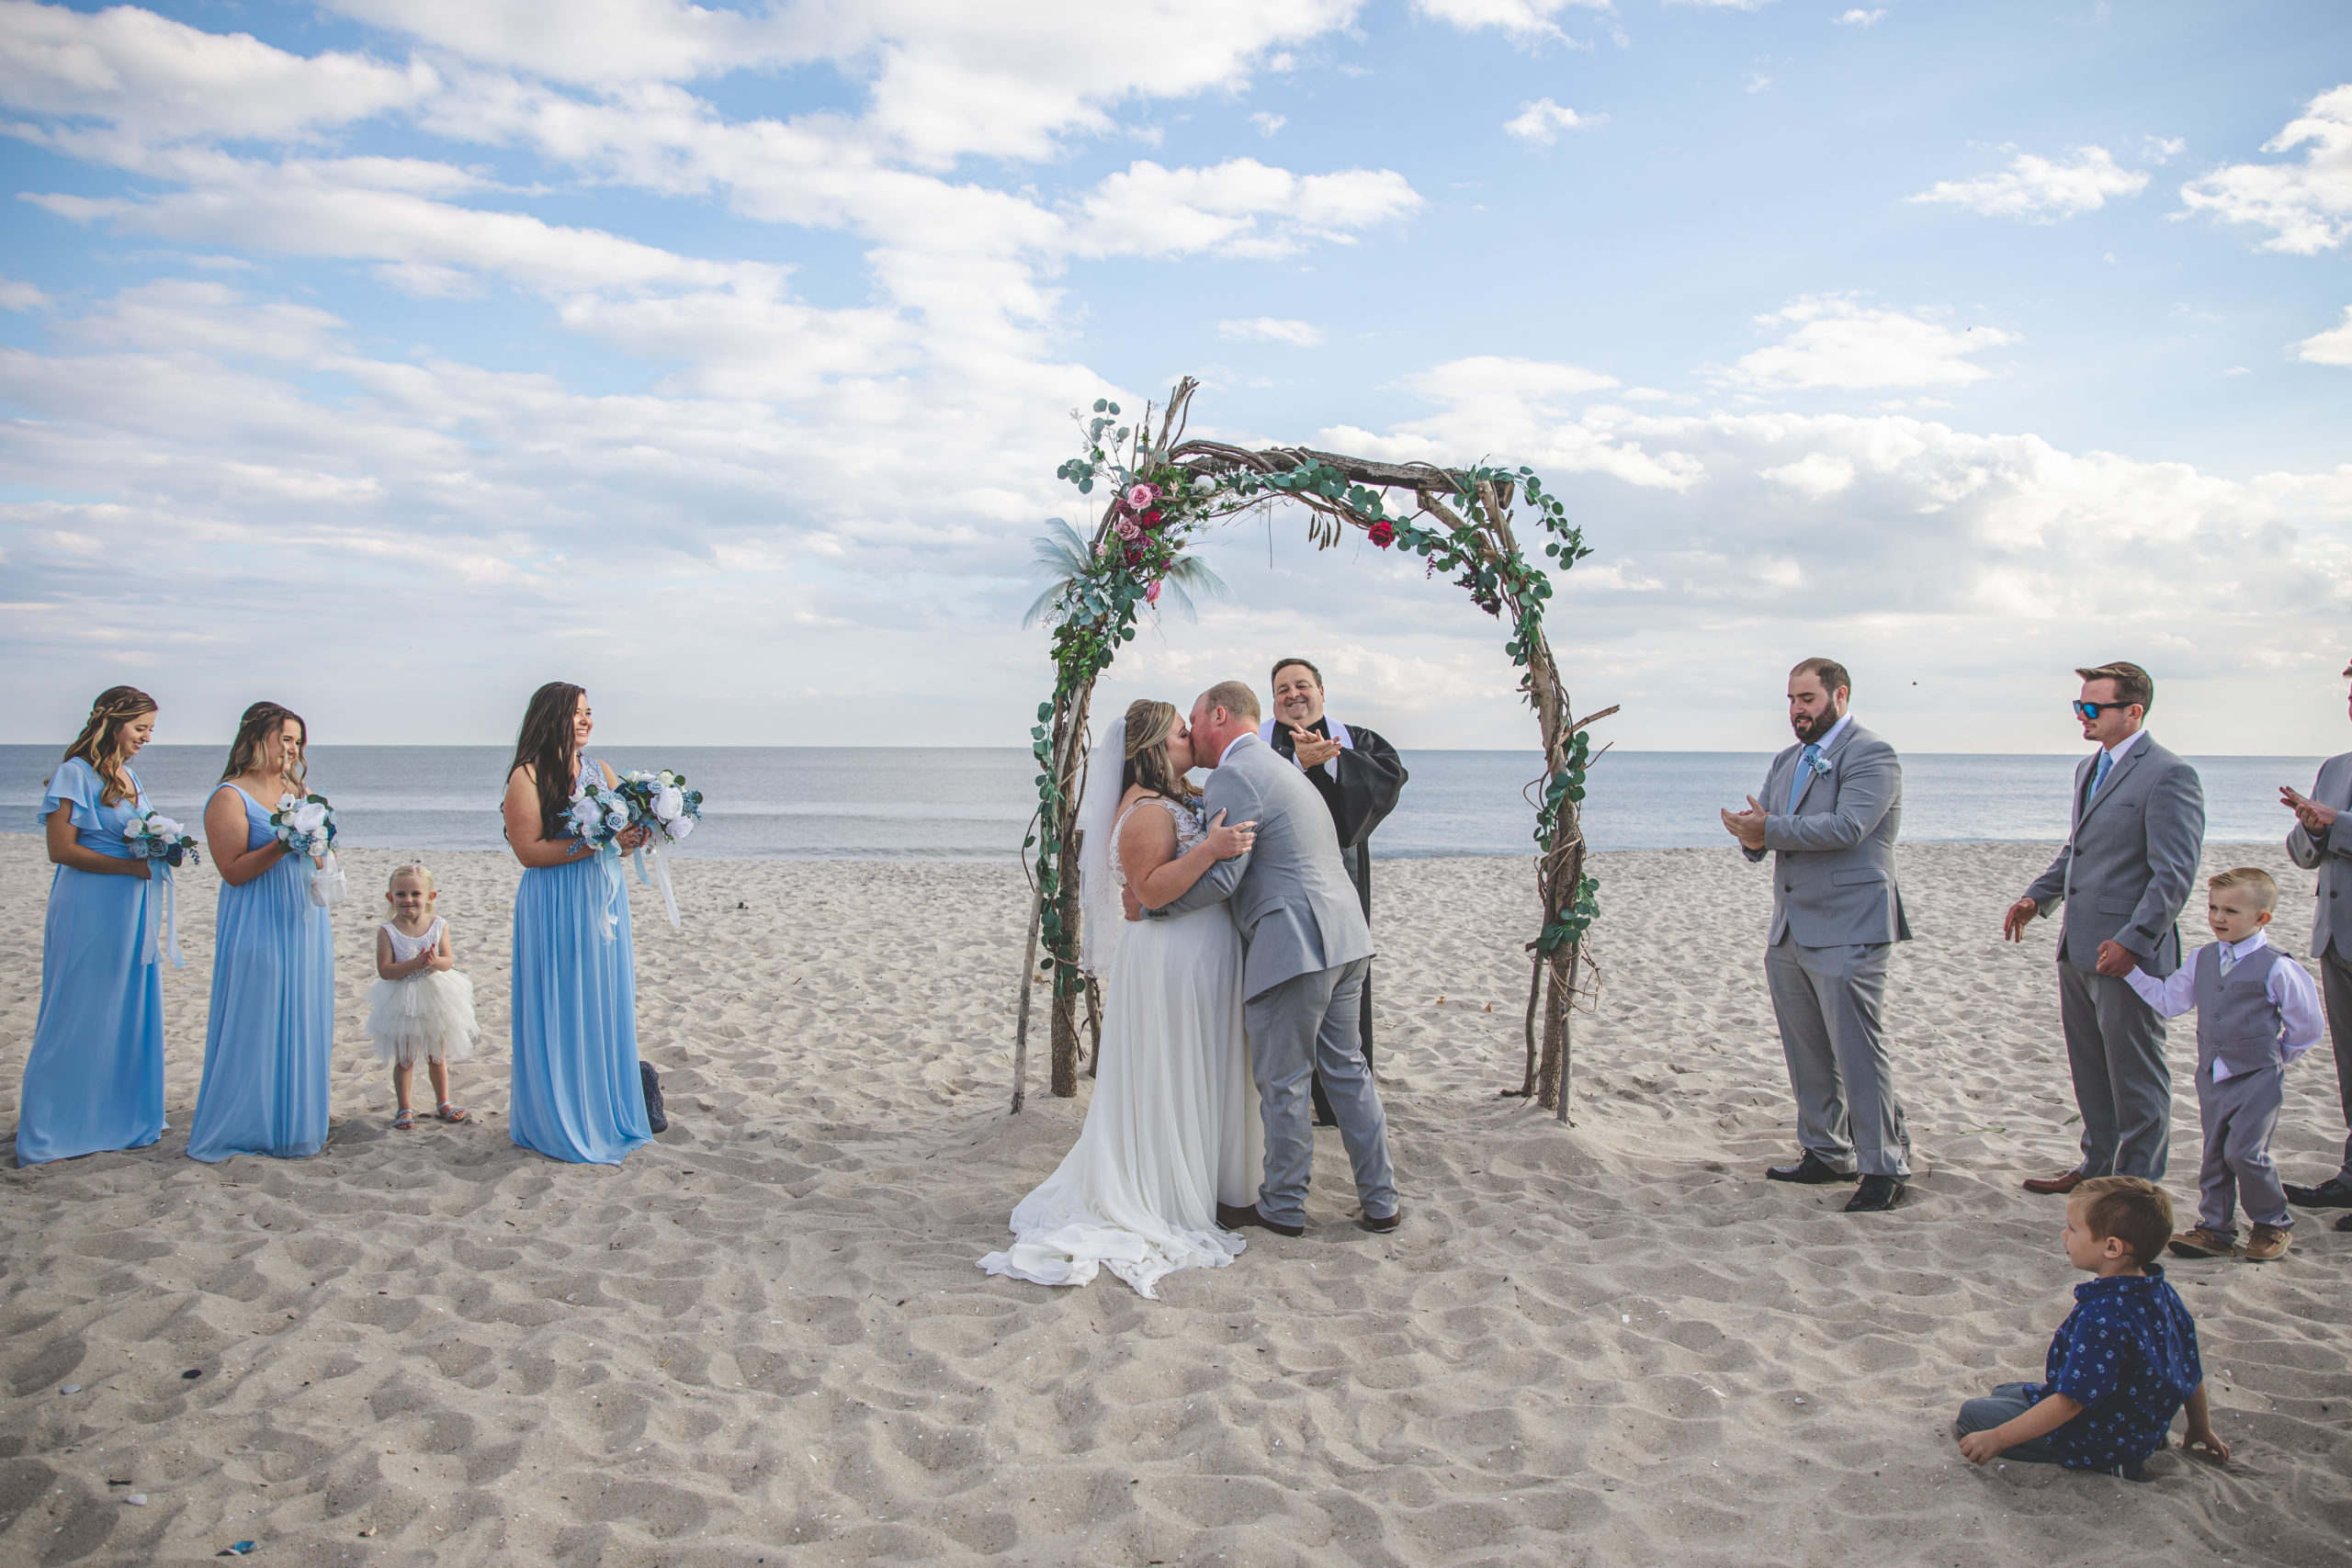 Cape may beach wedding